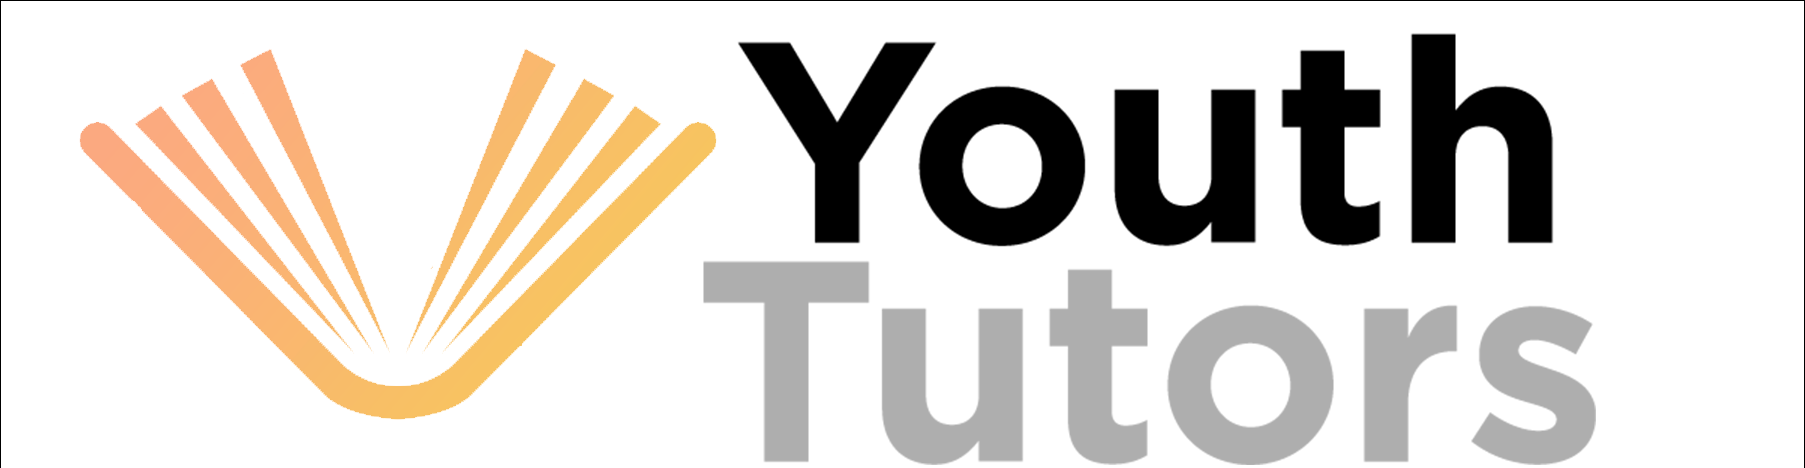 youth tutors